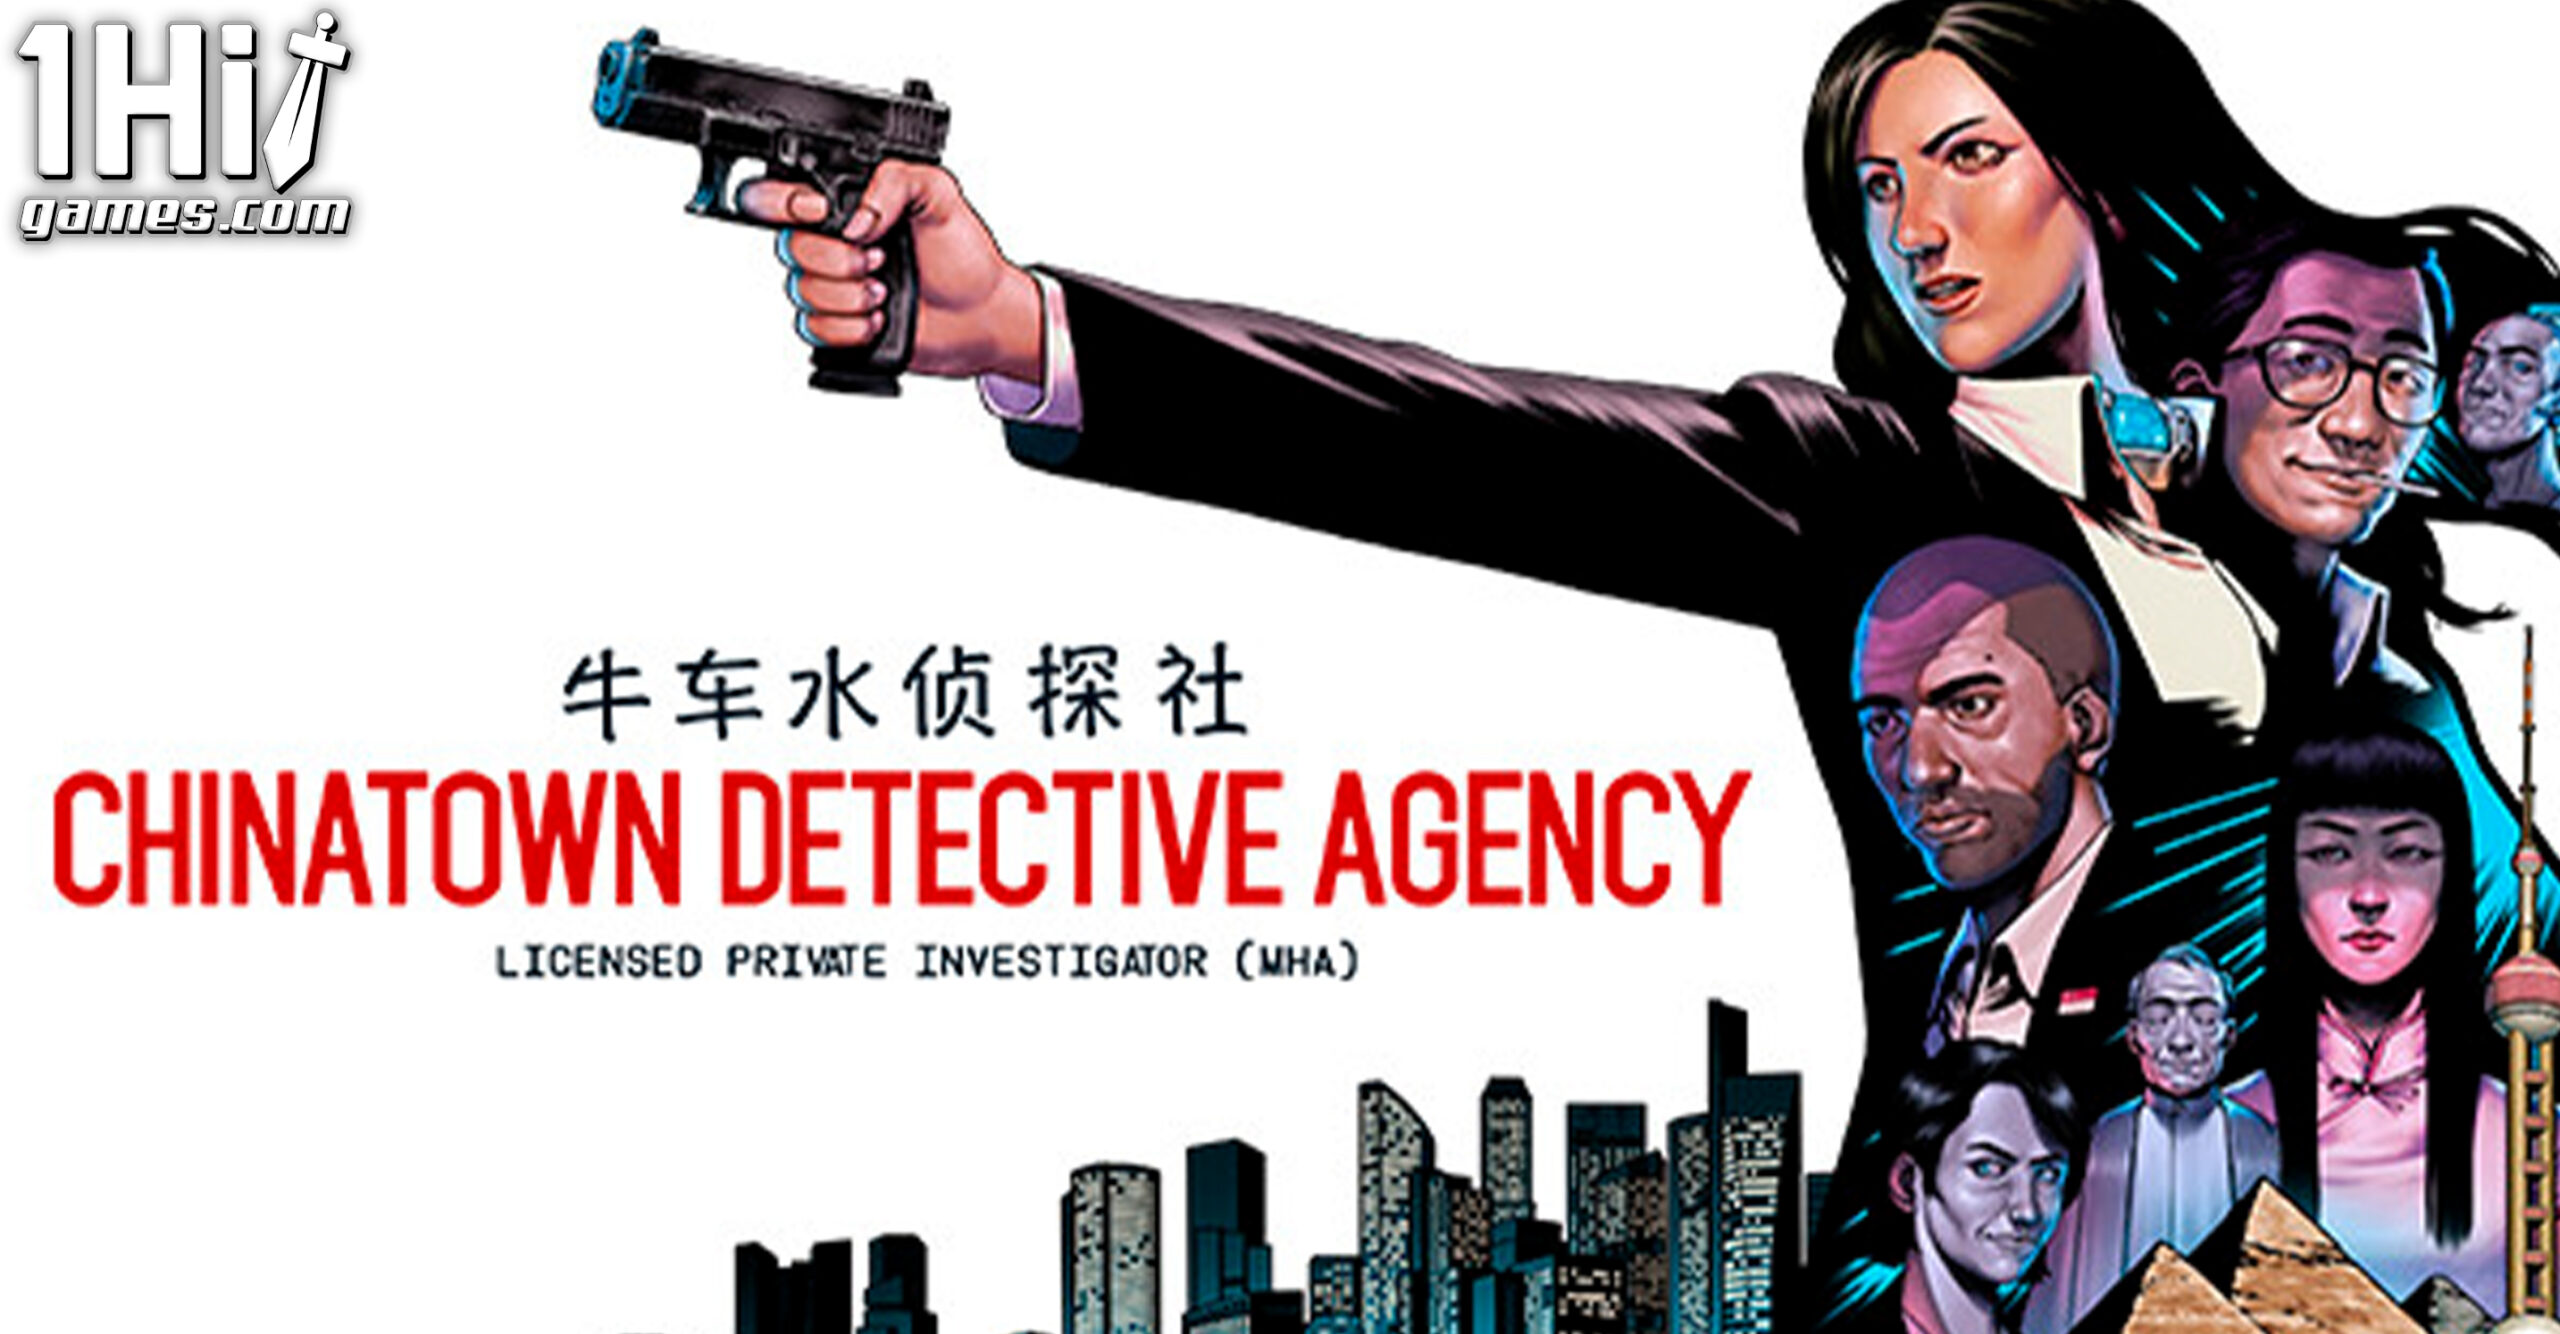 Chinatown Detective Agency chega em abril no Xbox